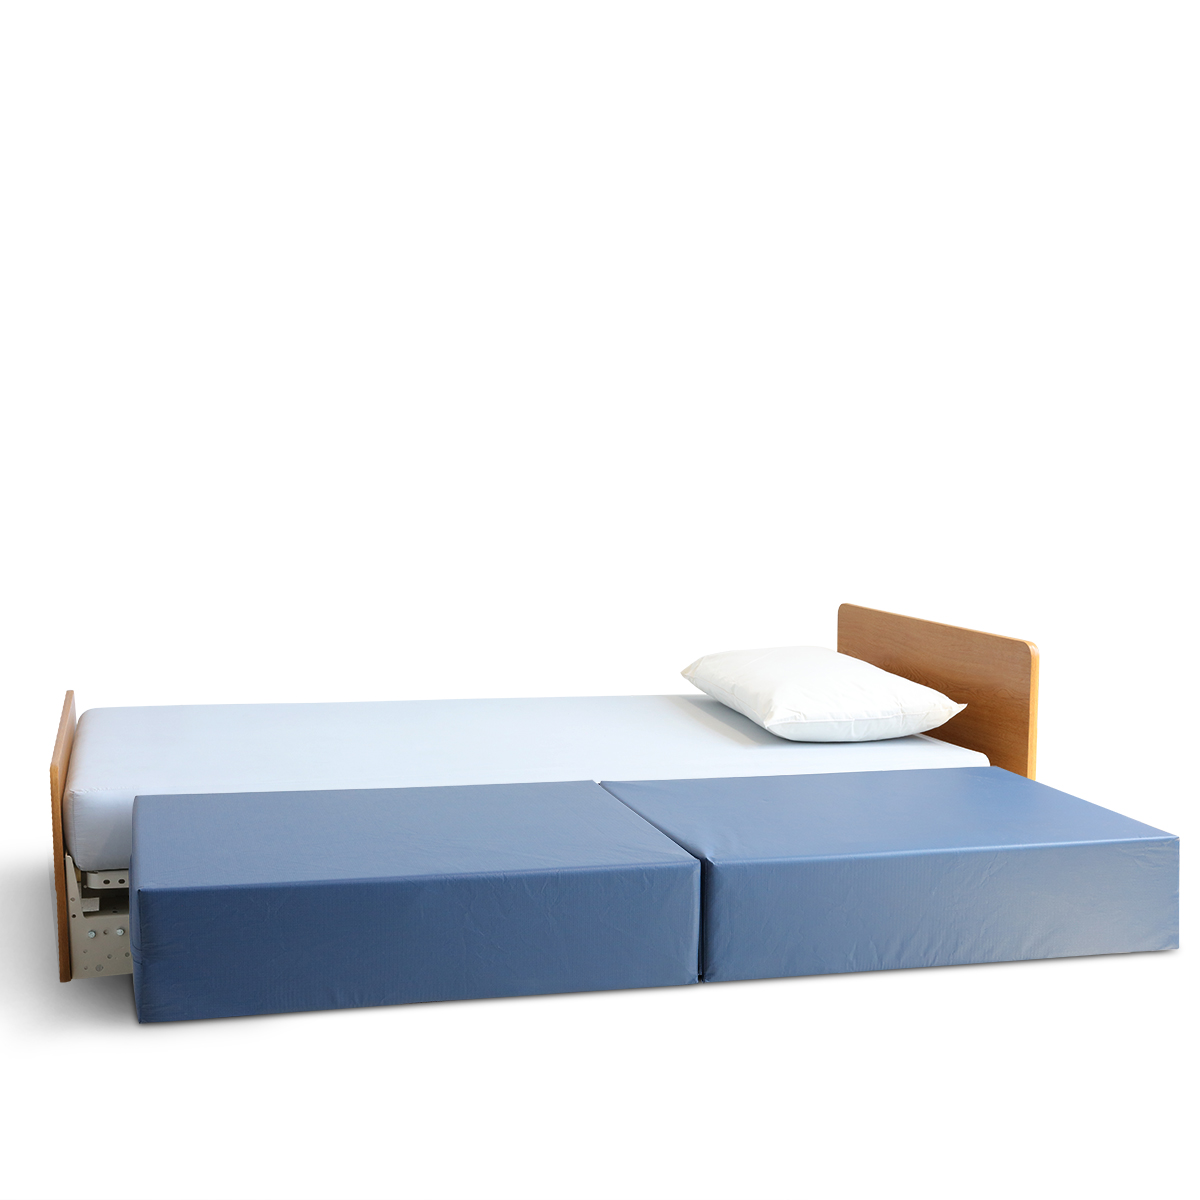 NYOrtho Low Bed Fall Safety Mat, Bi-Fold